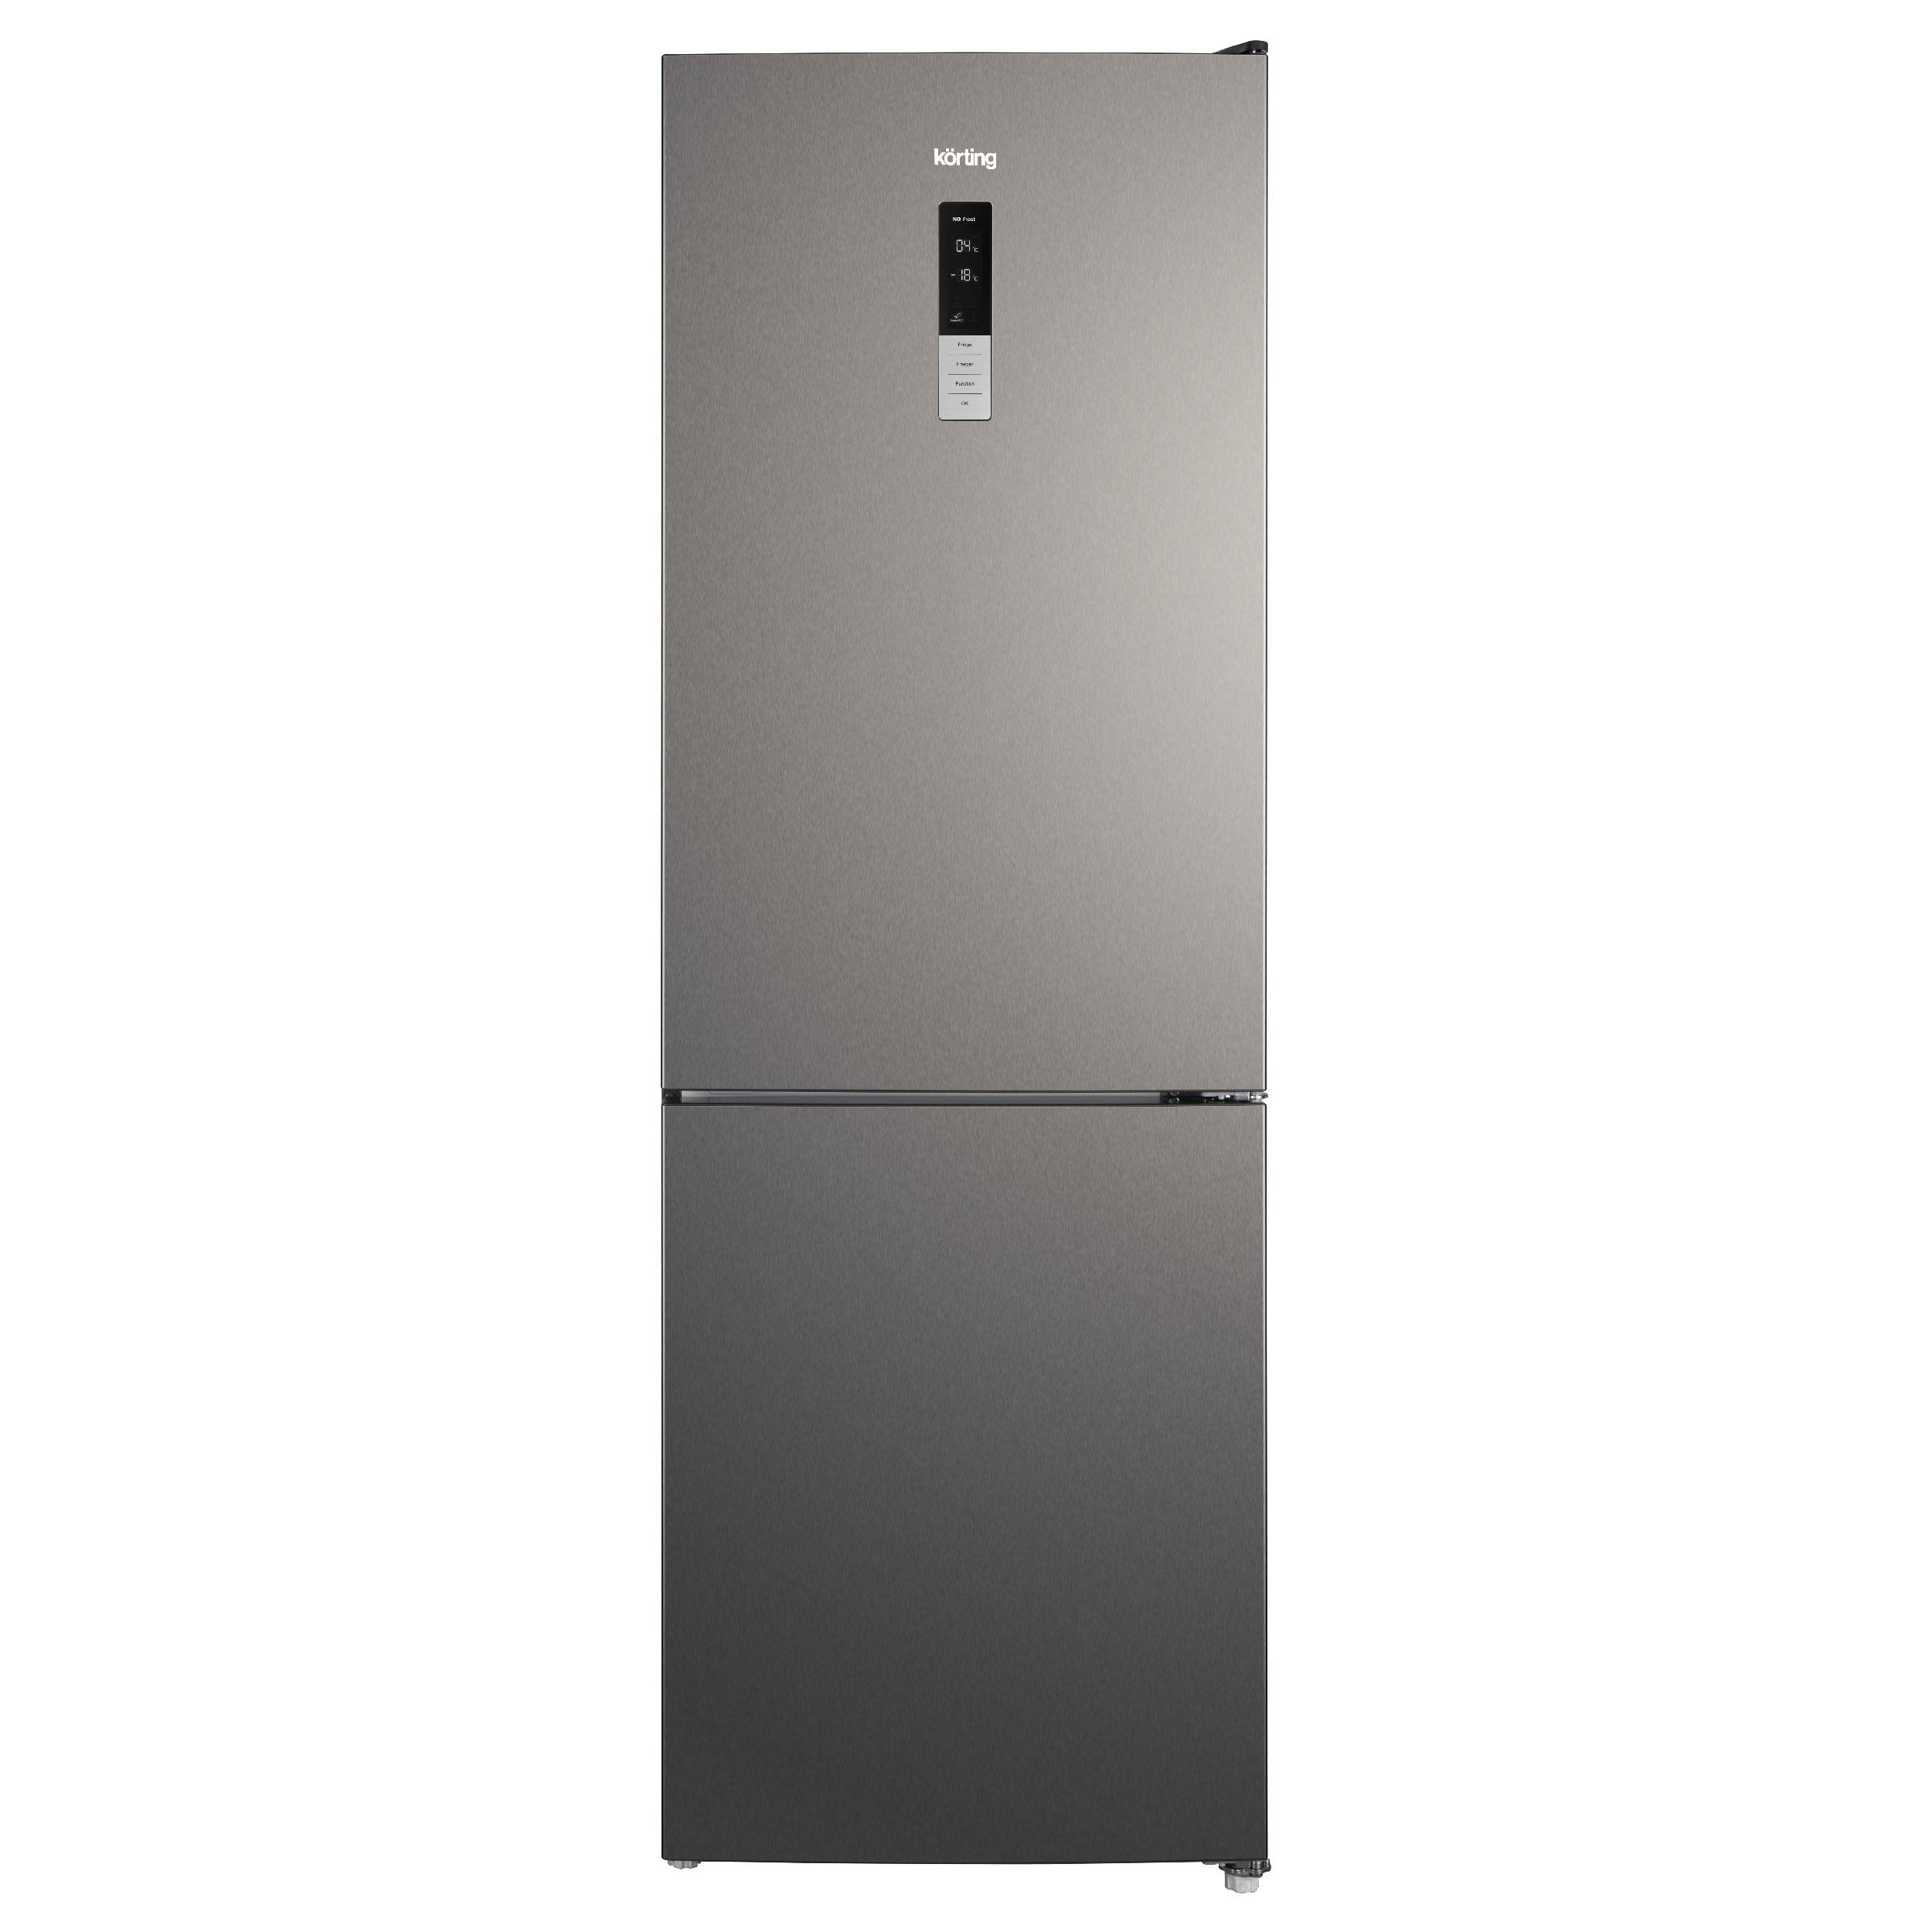 Холодильник Korting KNFC 61869 X серебристый, серый холодильник korting knfc 62029 x серый